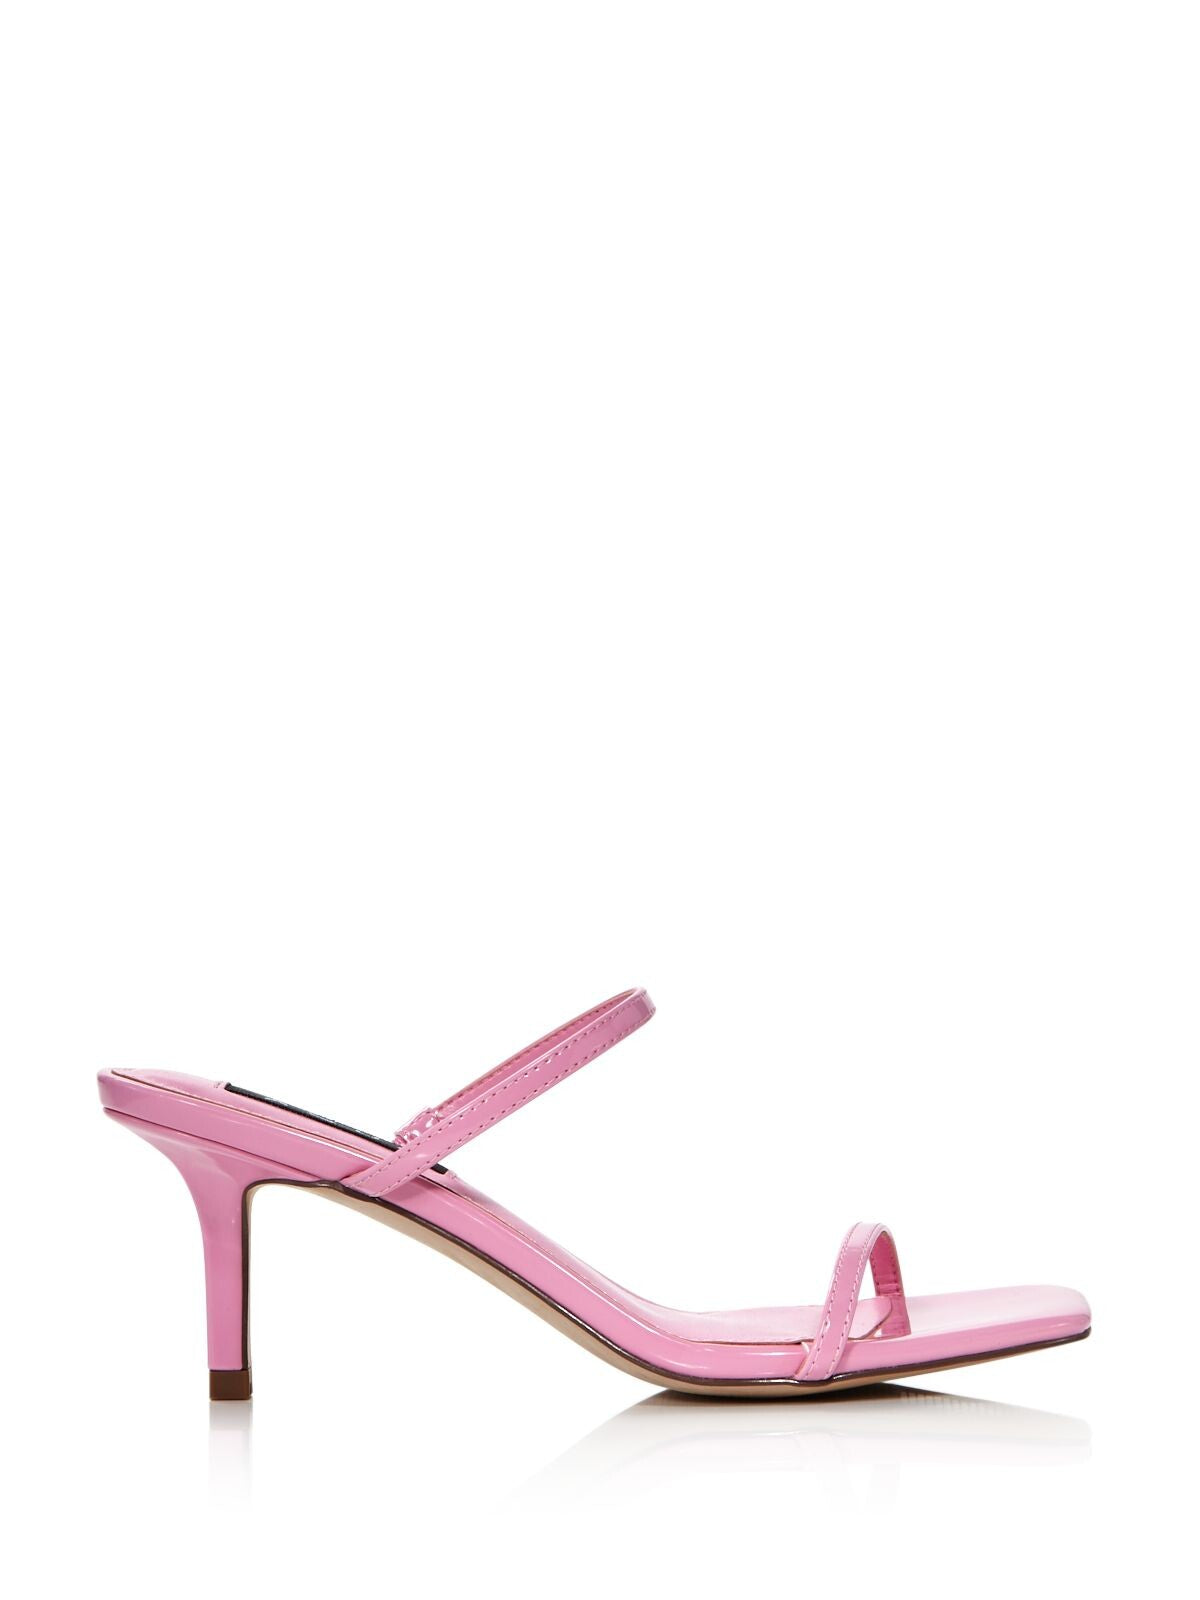 AQUA Womens Pink Comfort Ellen Square Toe Stiletto Slip On Heeled Sandal 7.5 M